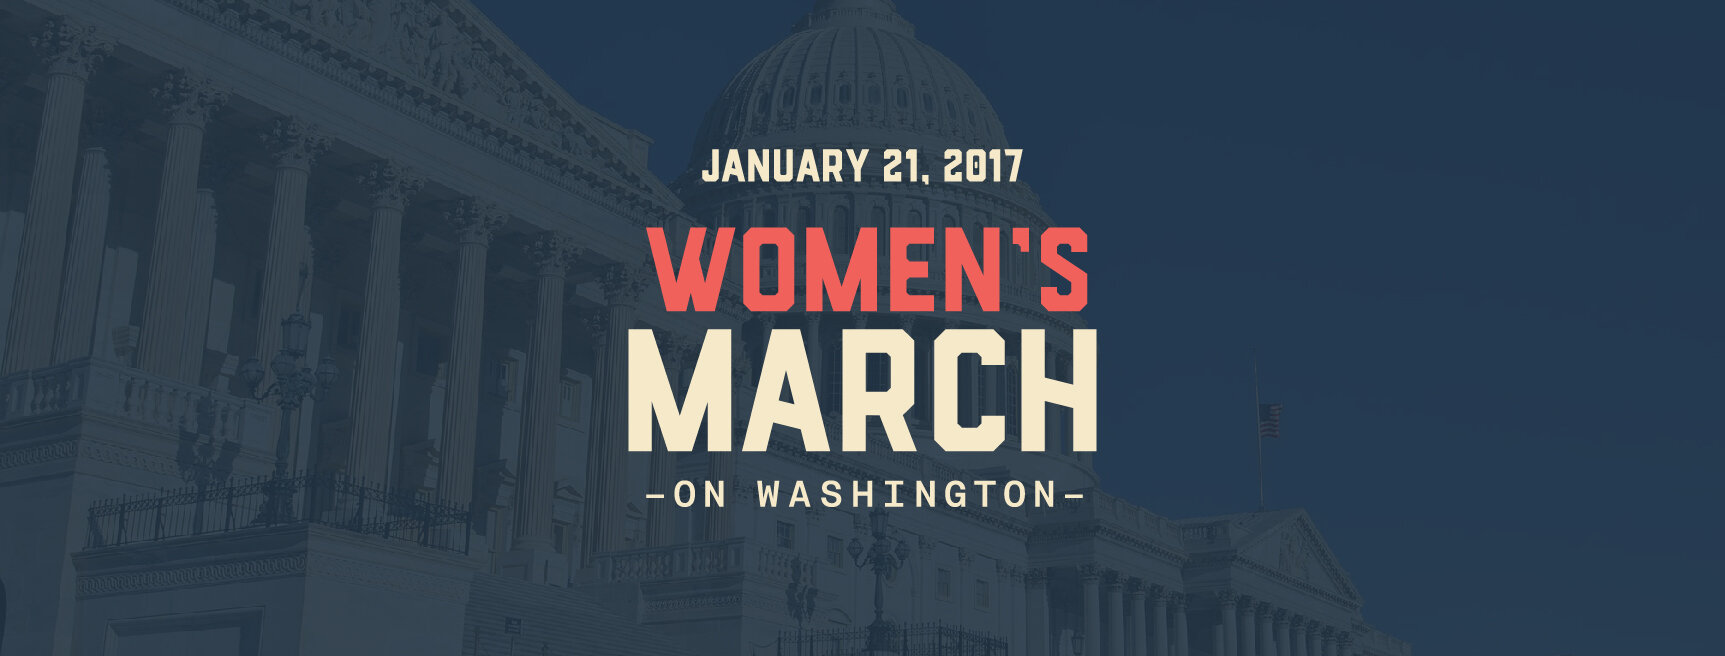 Women's March on Washington (1).jpg